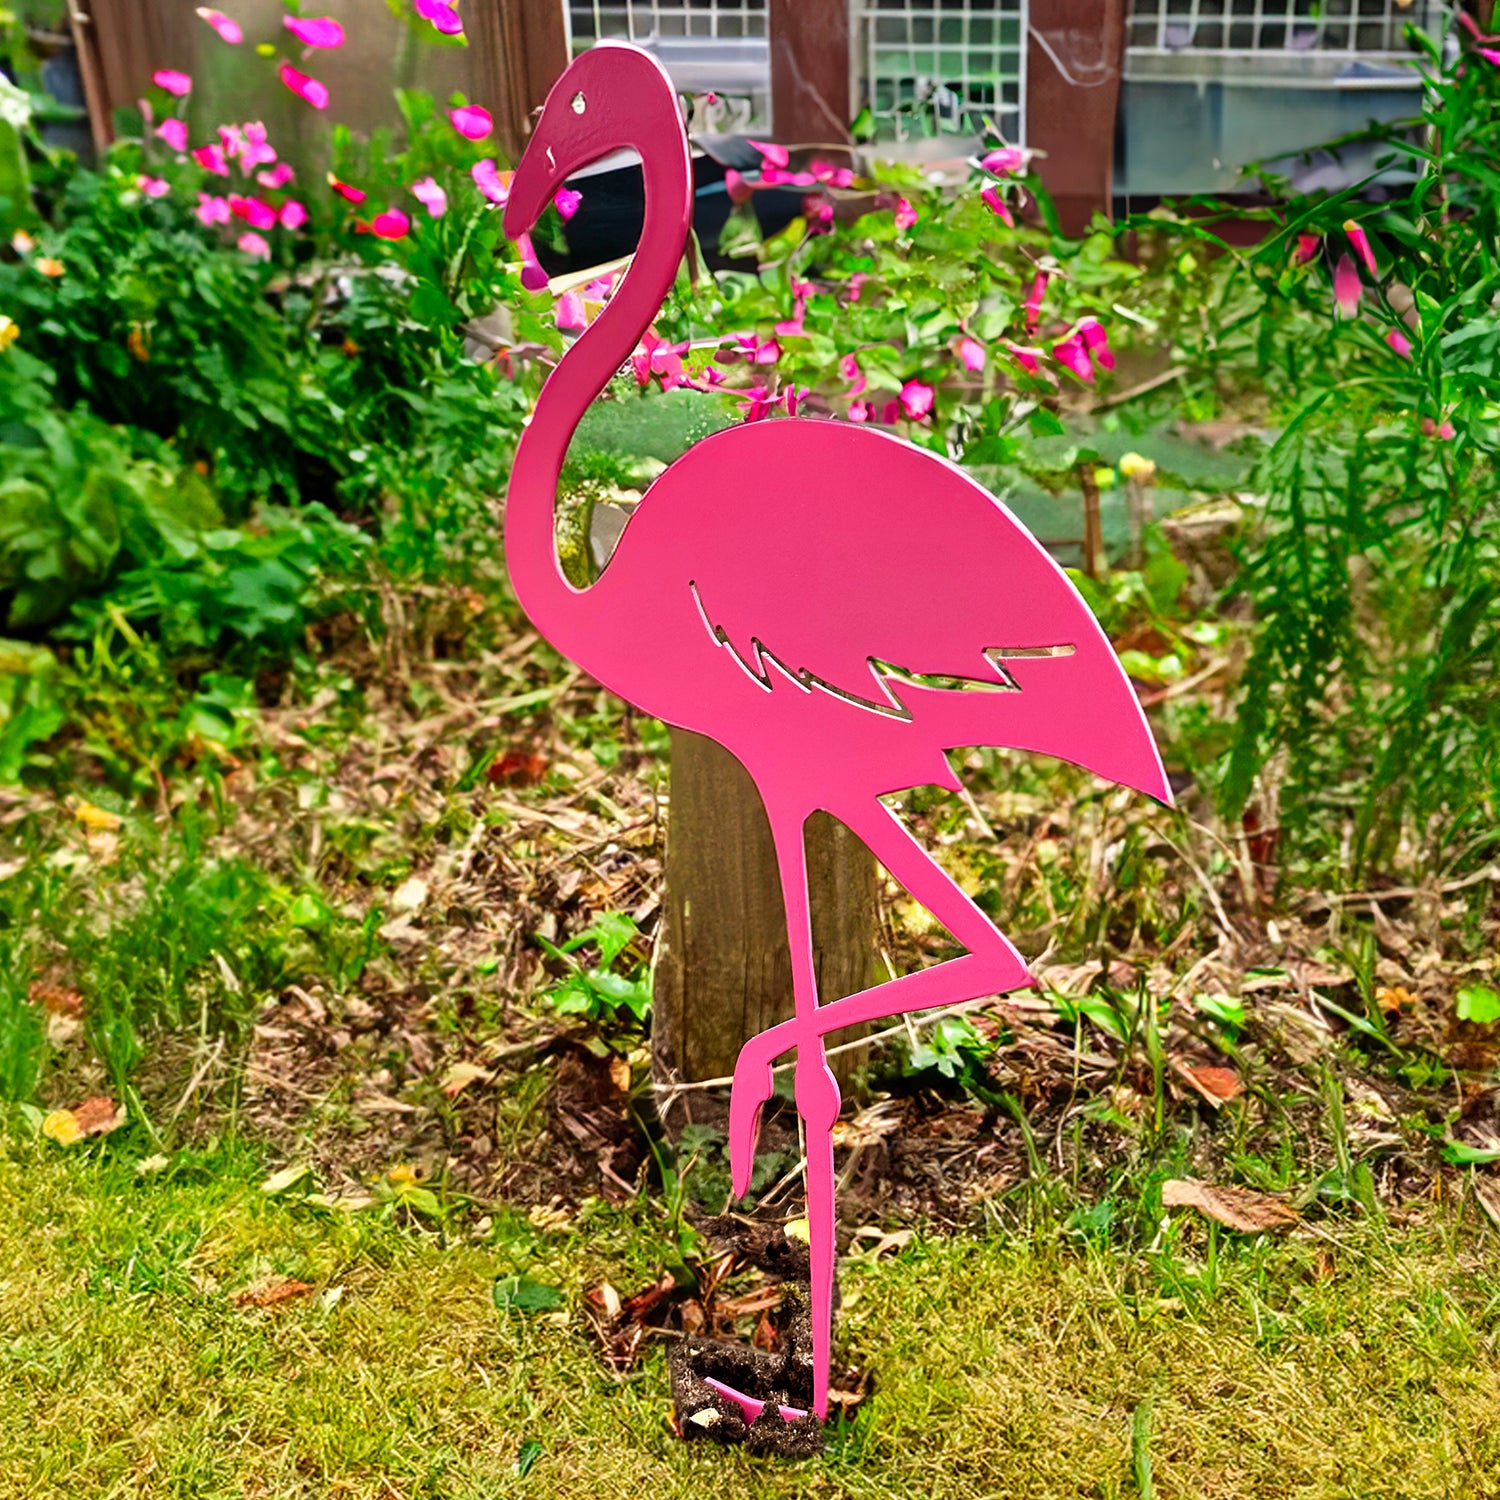 Flamingo Decorative Metal Garden Ornament